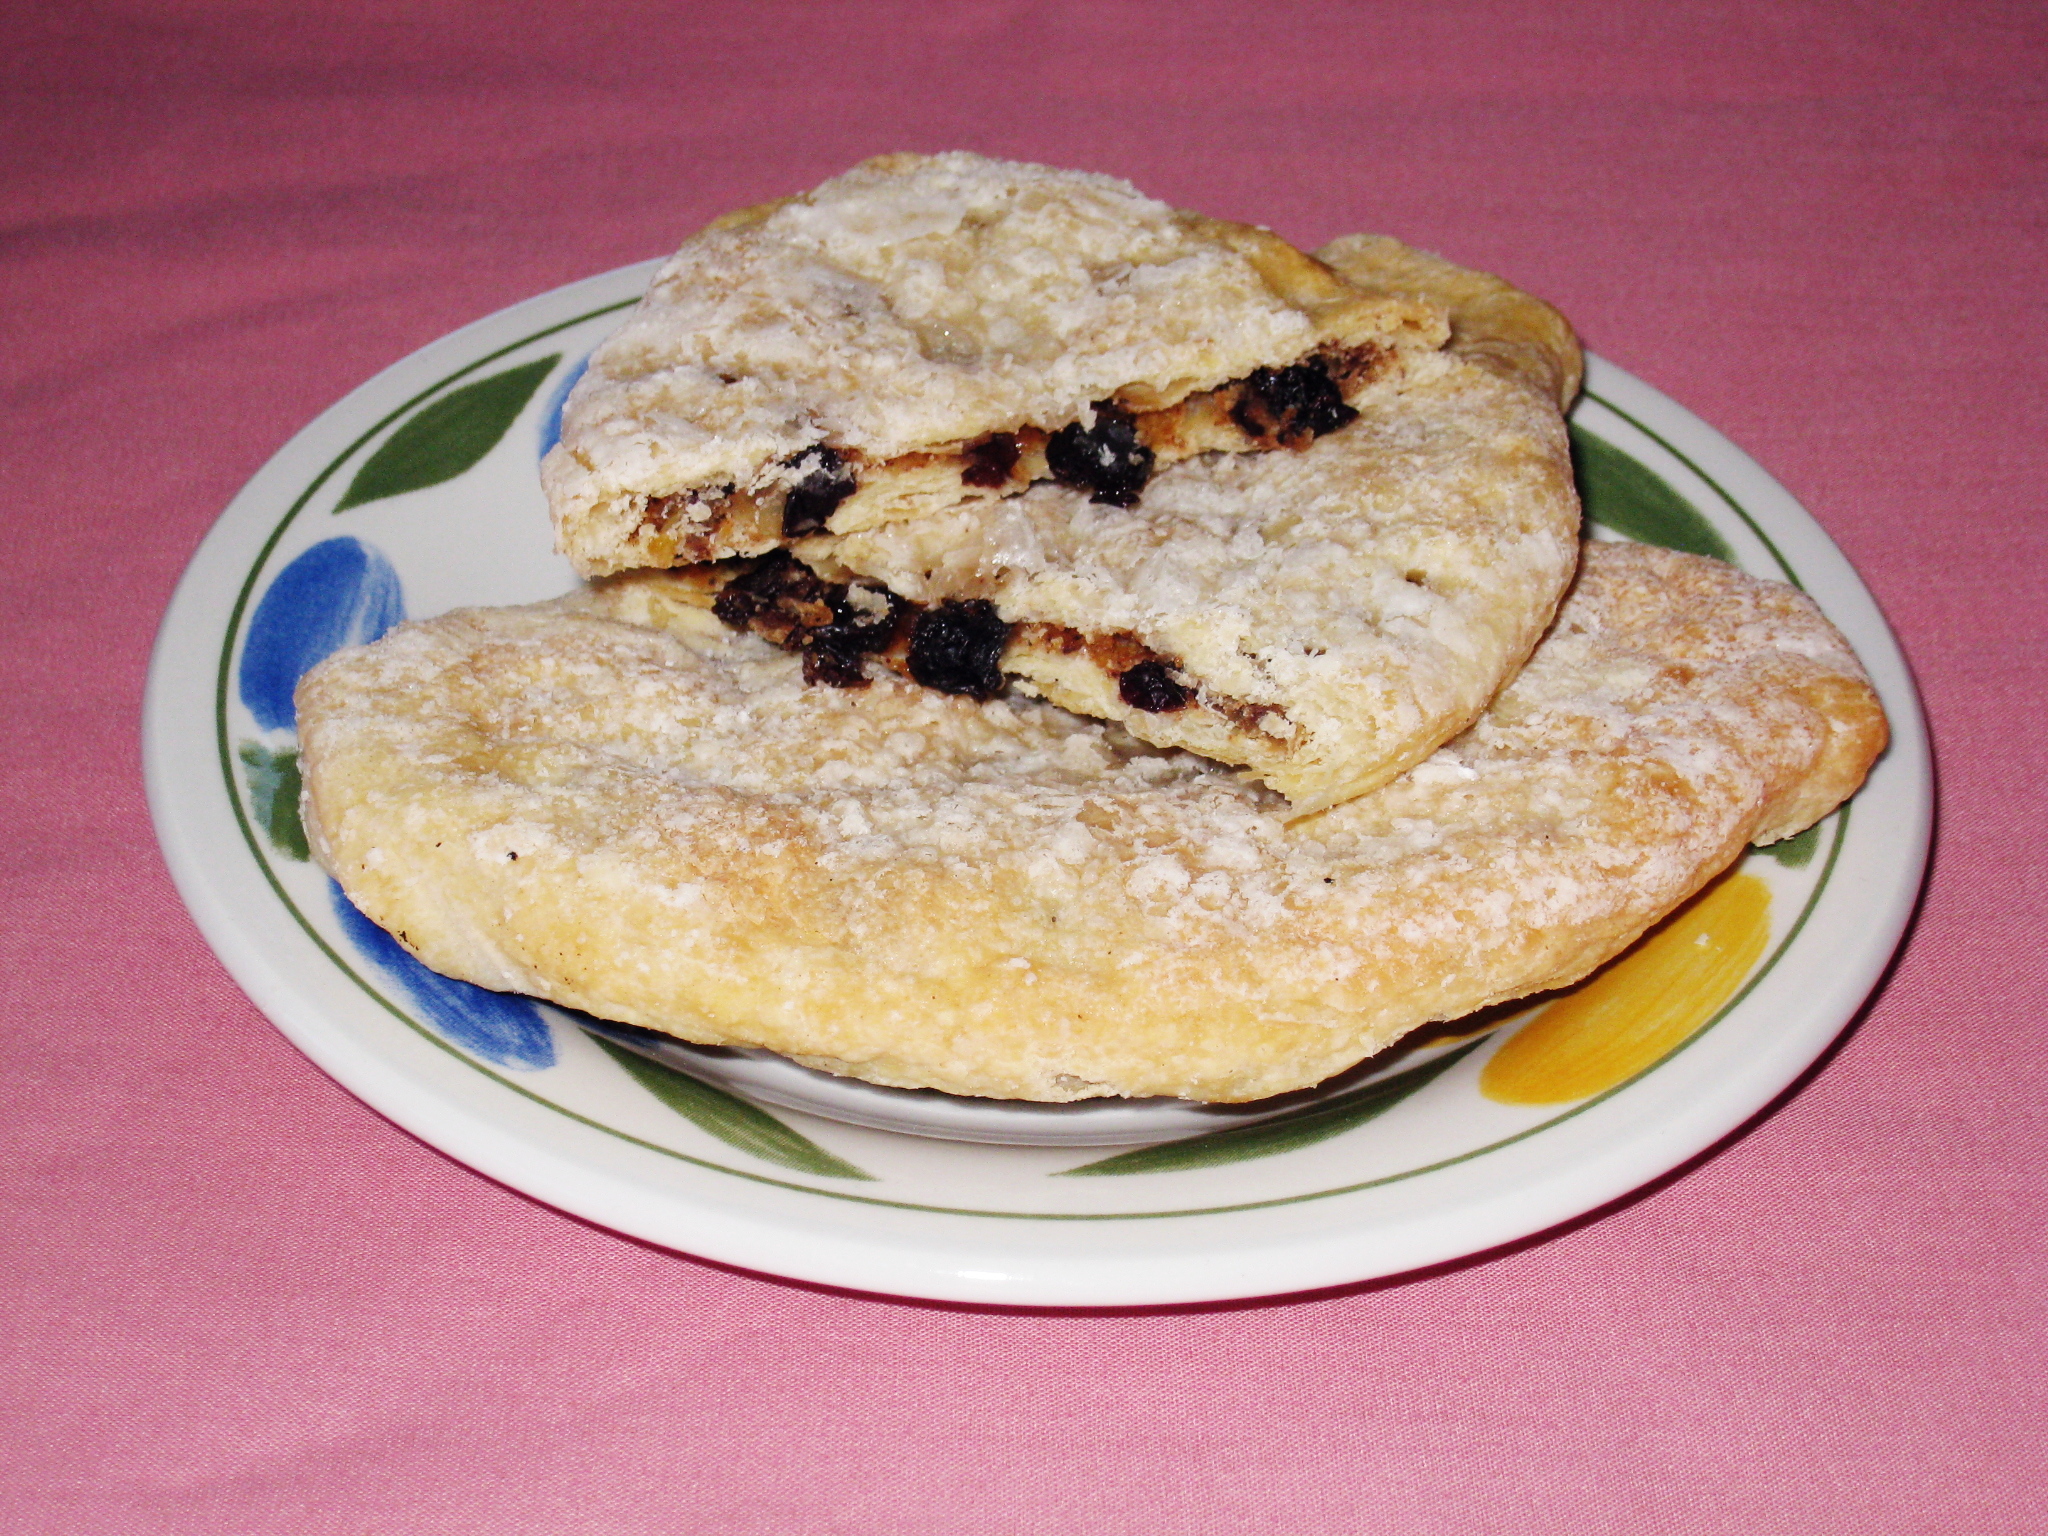 Banbury cake - Wikipedia